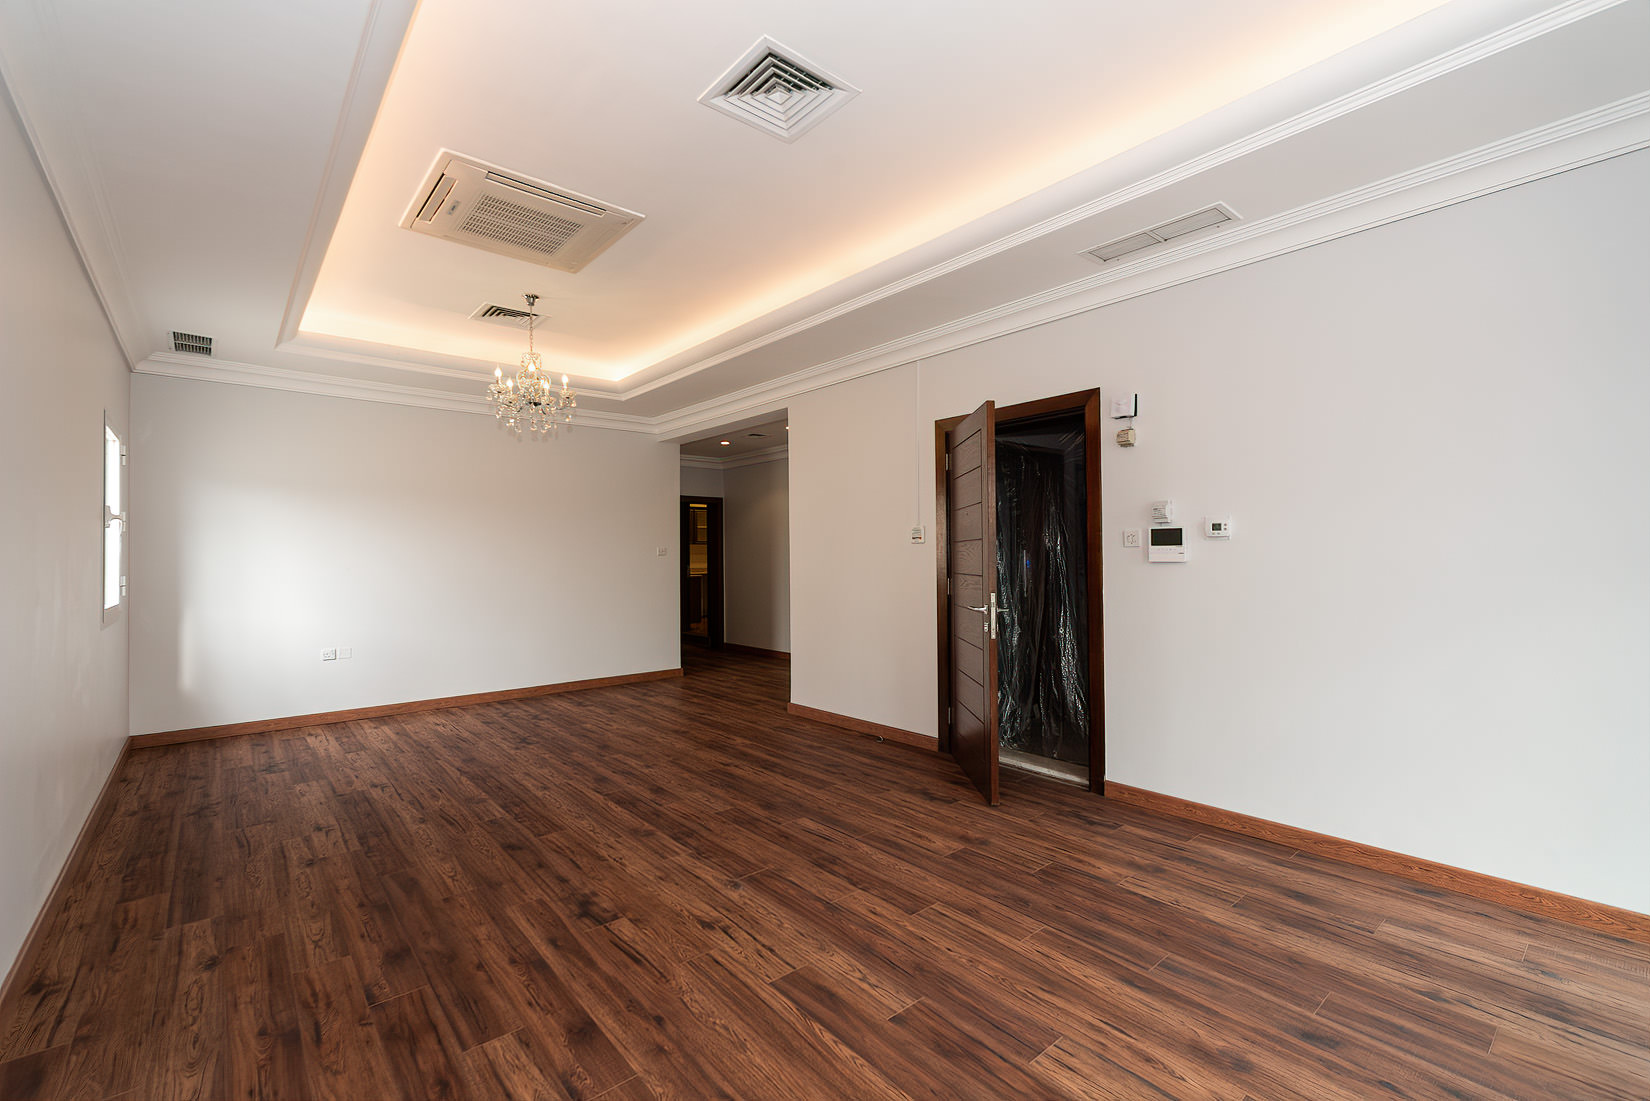 Salwa – spacious, three bedroom apartment